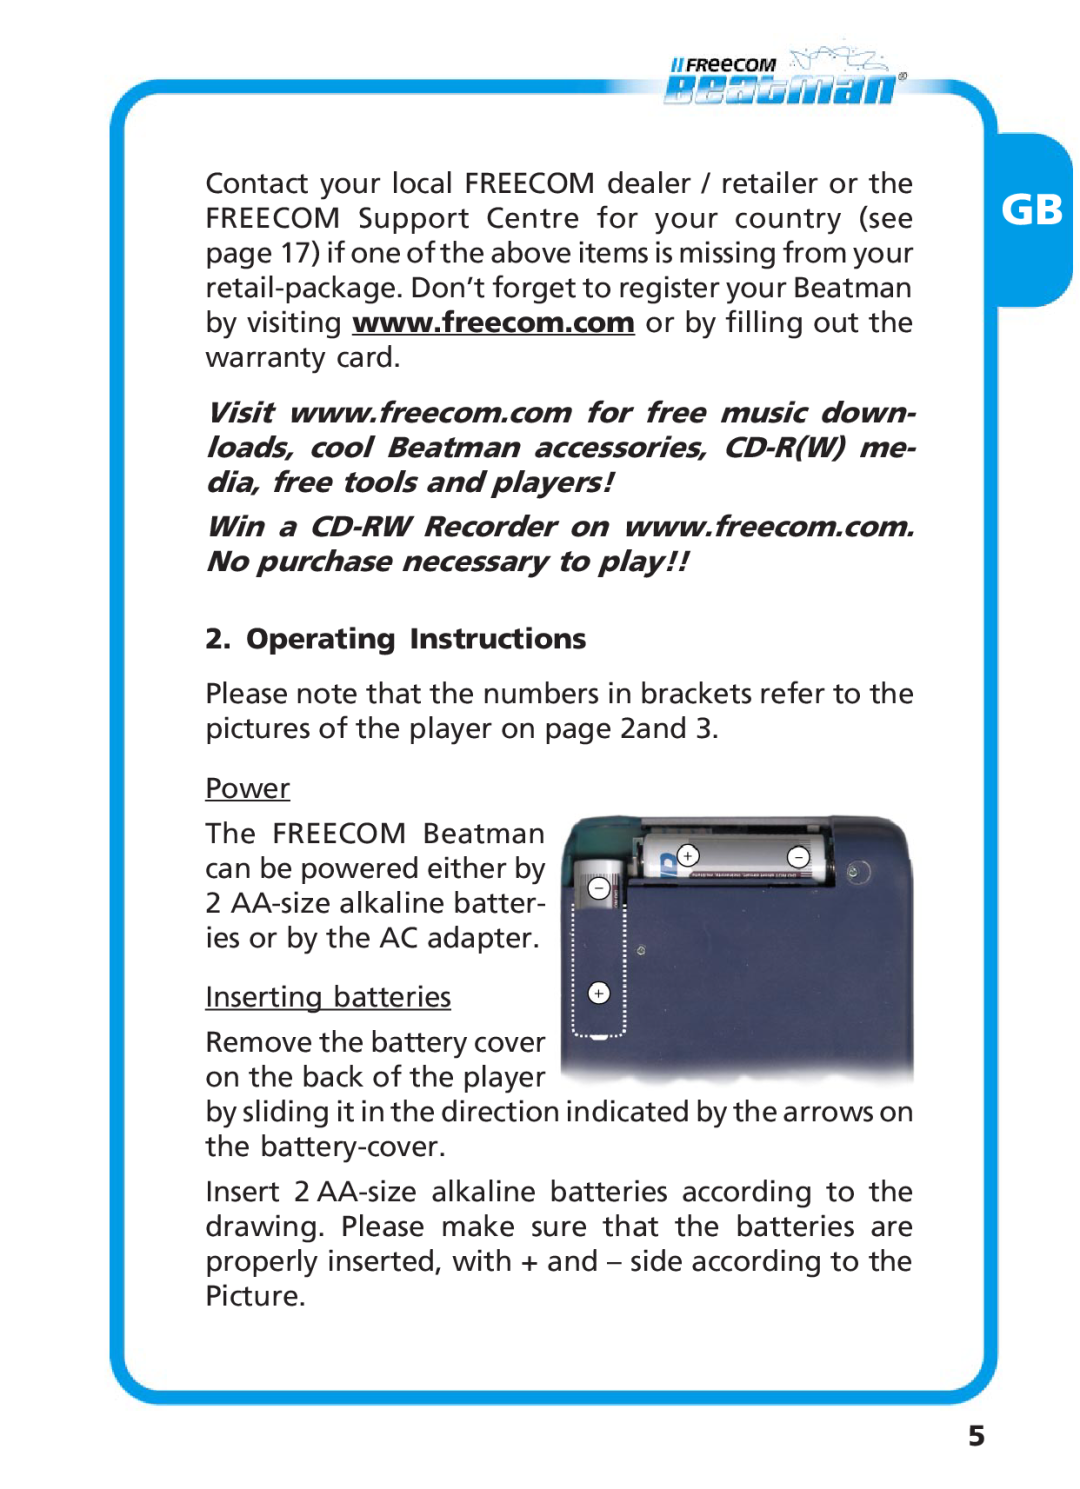 Freecom Technologies Beatman Mini CD I manual Operating Instructions, Power, Inserting batteries 